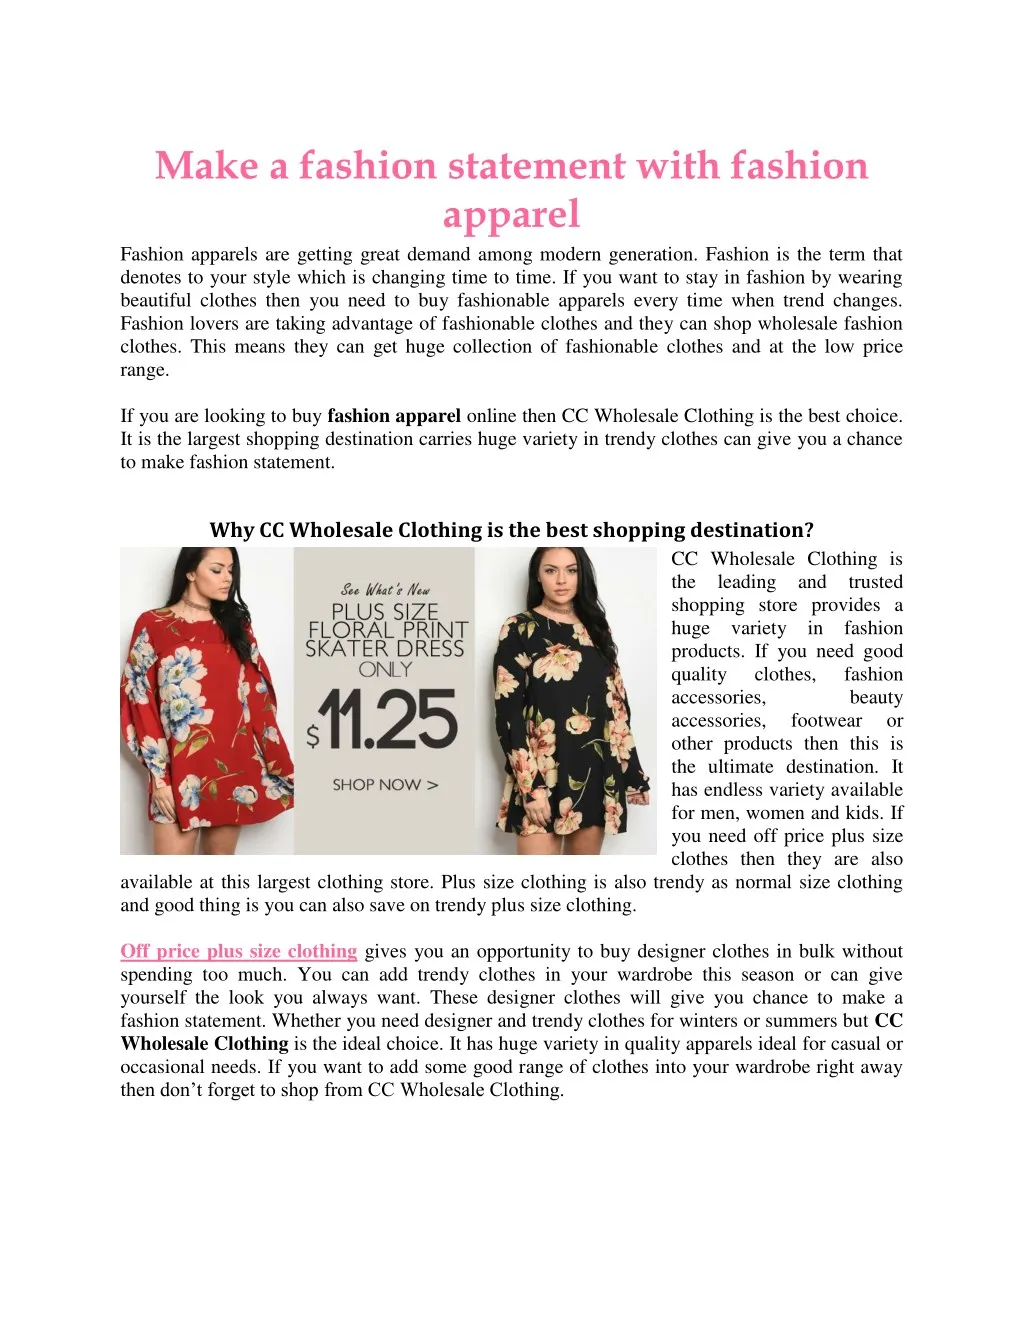 make a fashion statement with fashion apparel